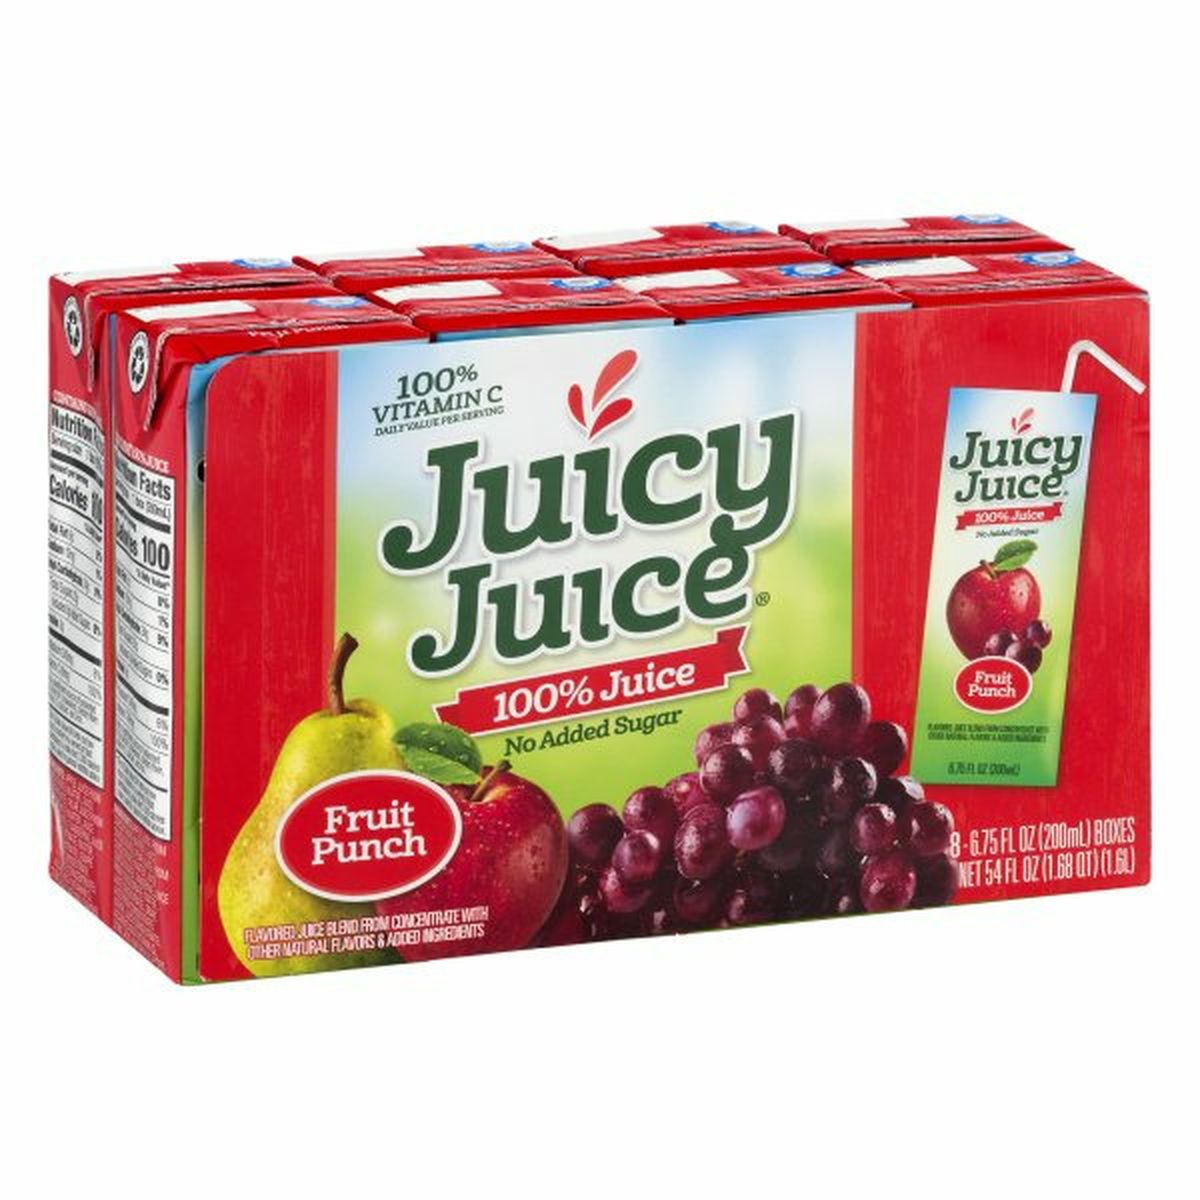 Calories in Juicy Juice 100% Juice, Fruit Punch, 8 Pack